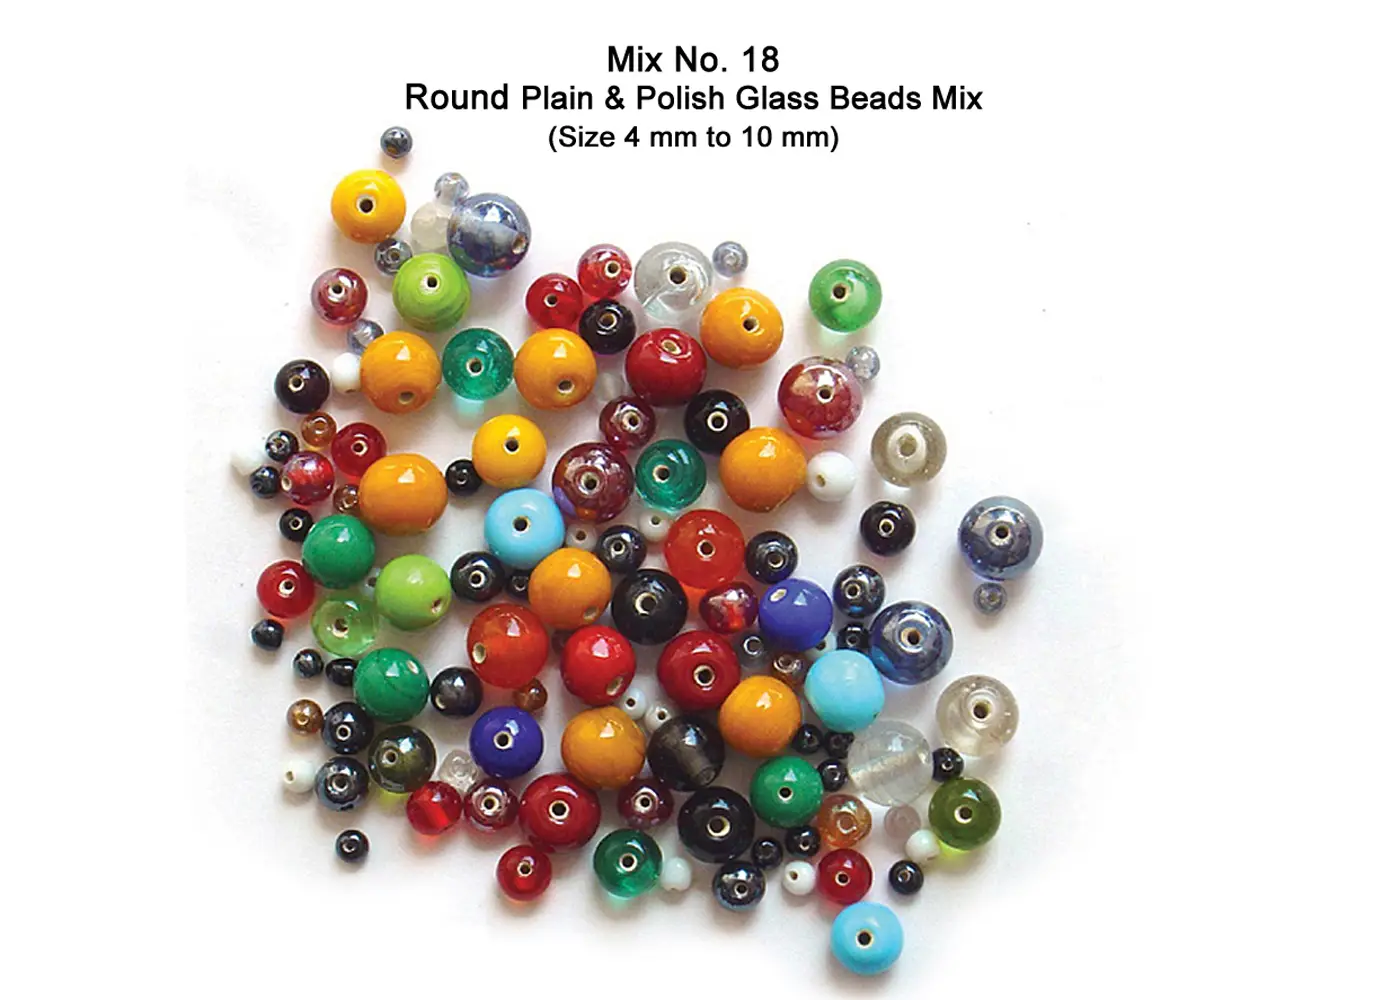 Round Plain & Polish Glass Beads Mix (Size 4 mm to 10 mm)